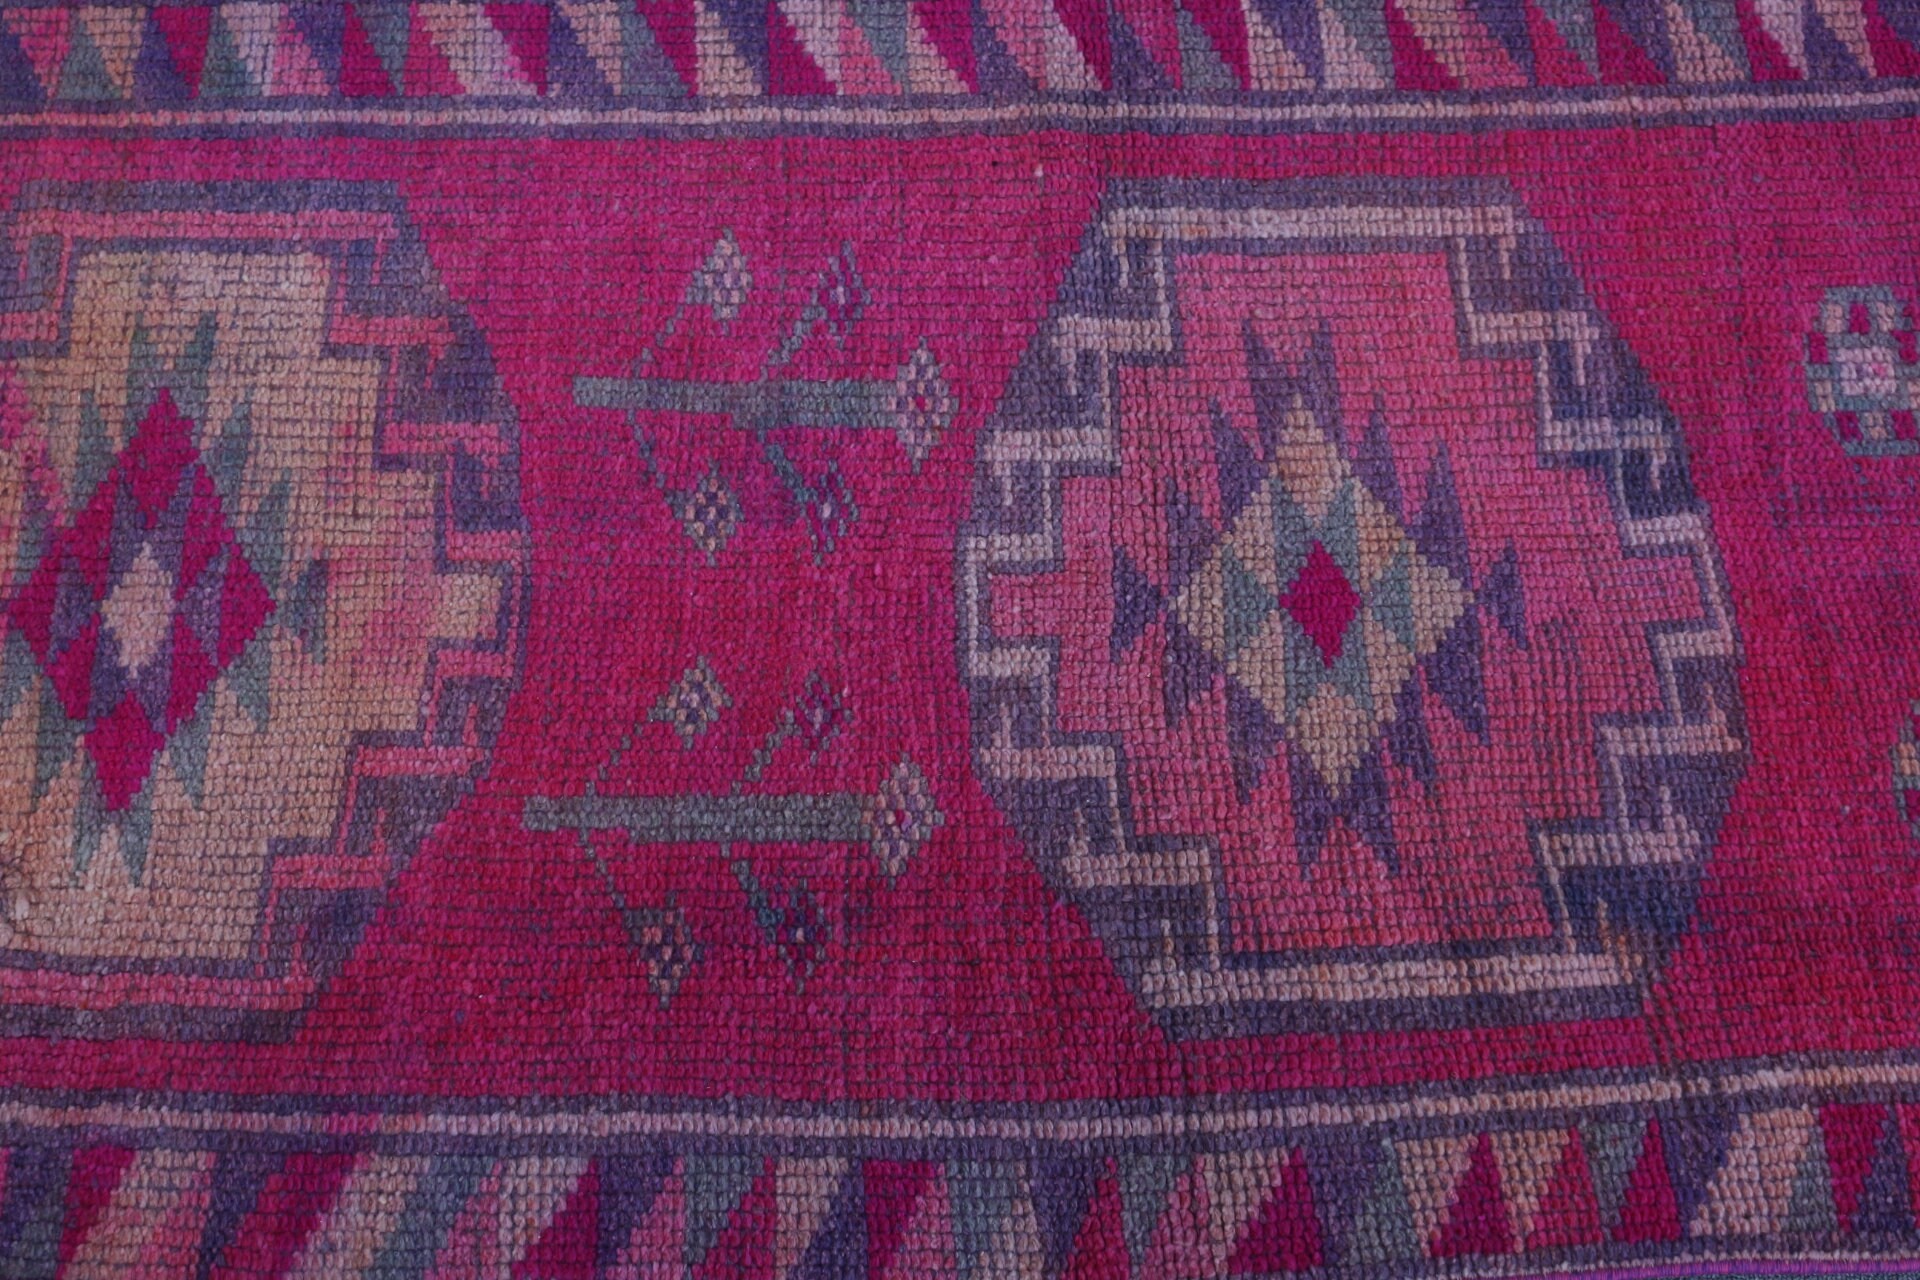 Turkish Rug, Kitchen Rug, Vintage Rug, Pink Home Decor Rugs, Antique Rug, Oriental Rug, Stair Rugs, Nomadic Rug, 2.6x11.7 ft Runner Rug